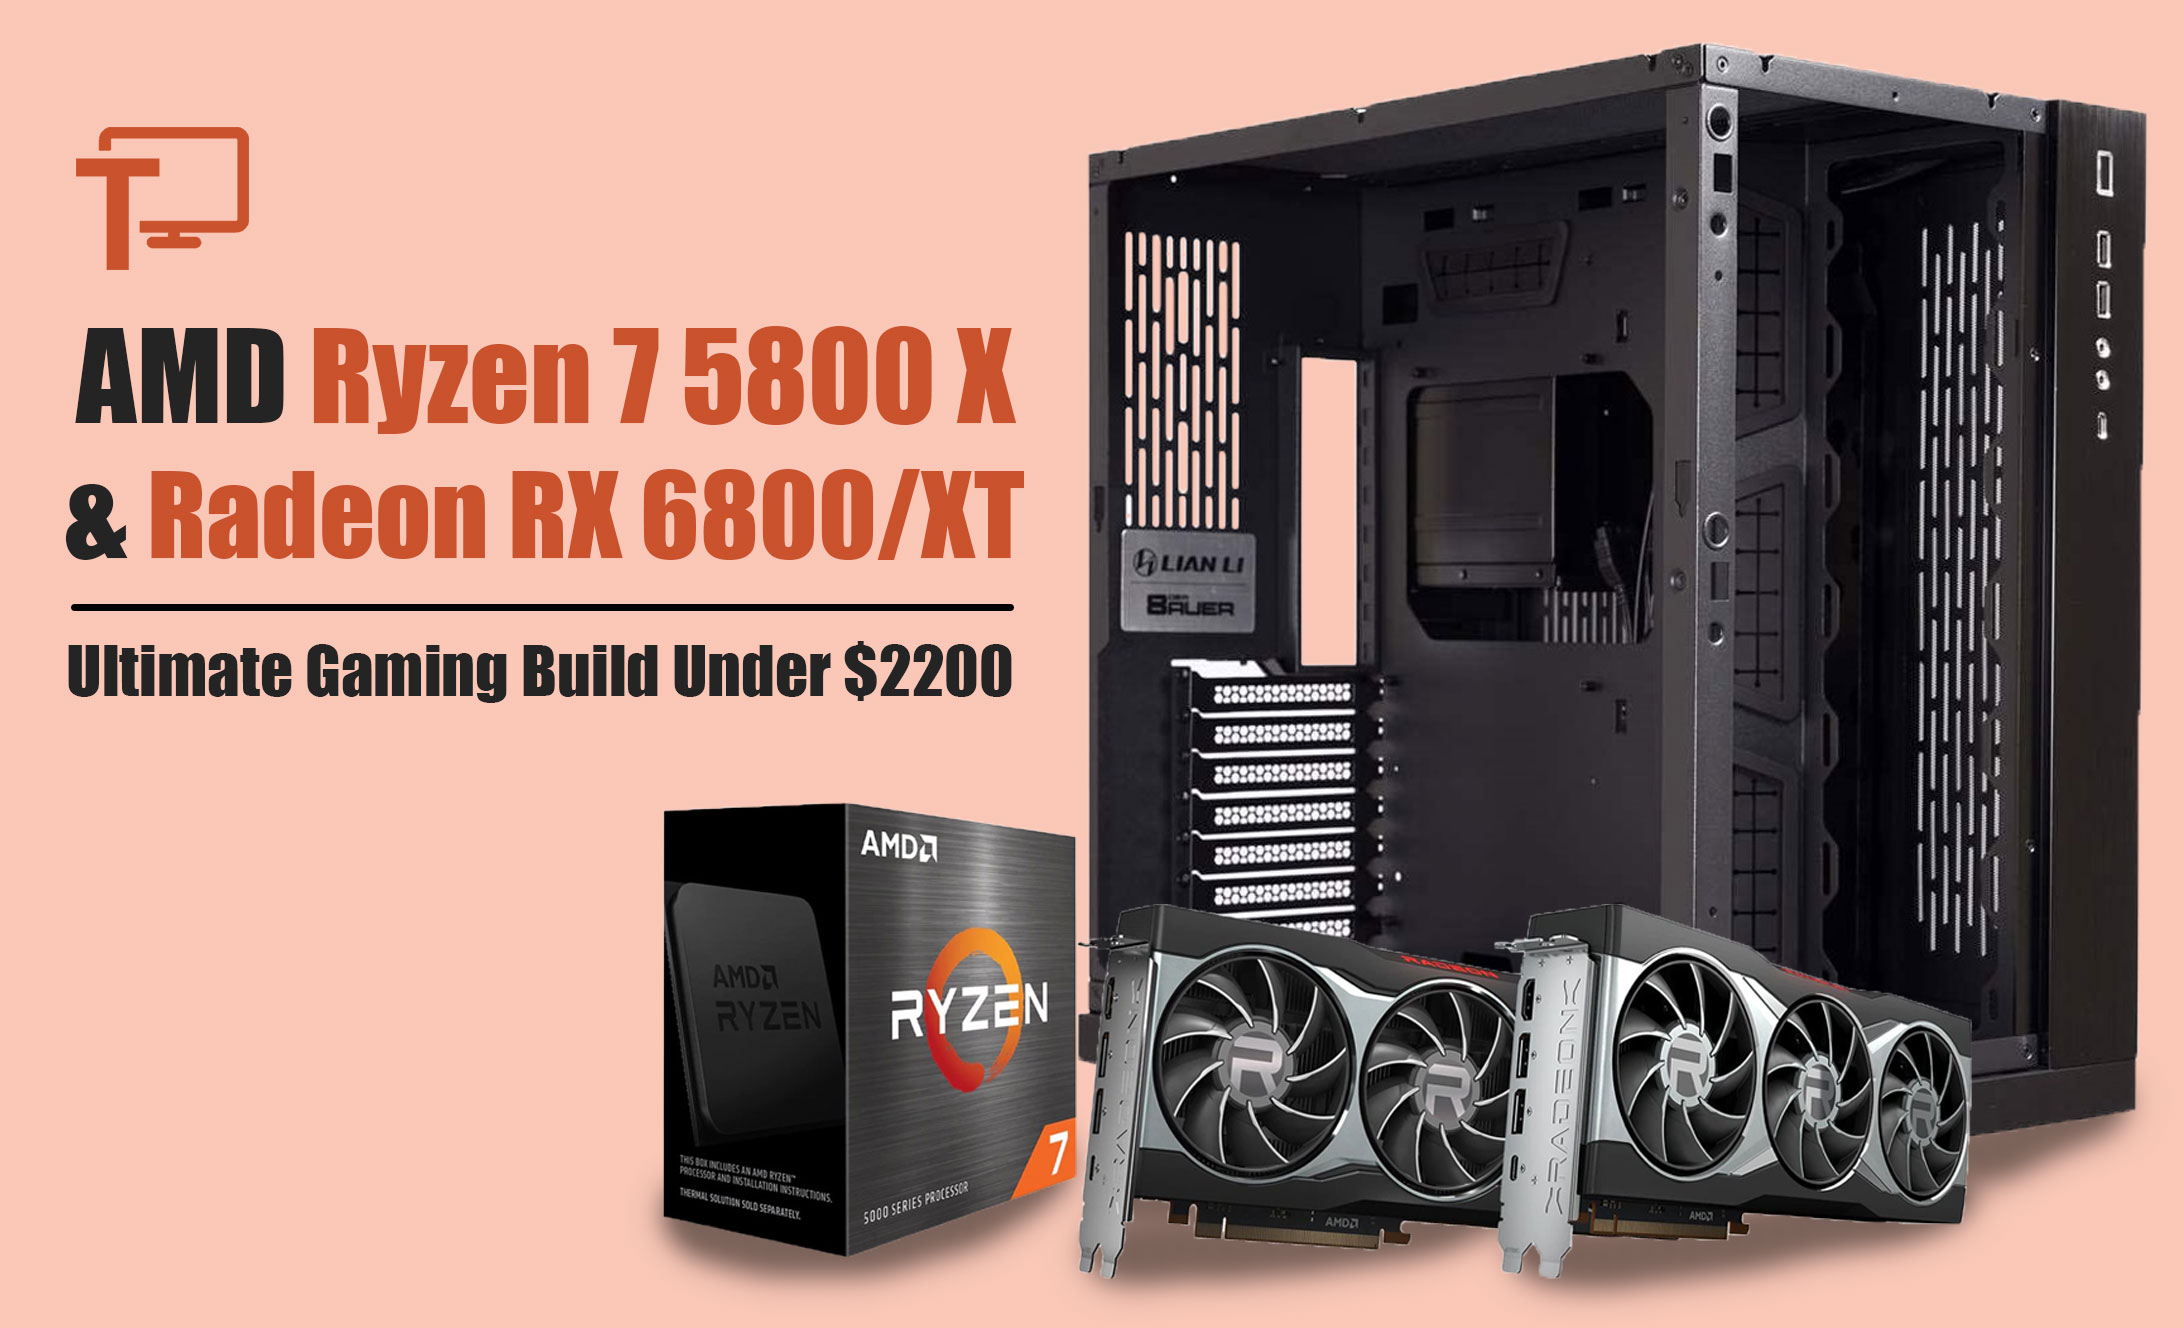 Ryzen 7 5800X and Radeon RX 6800 XT